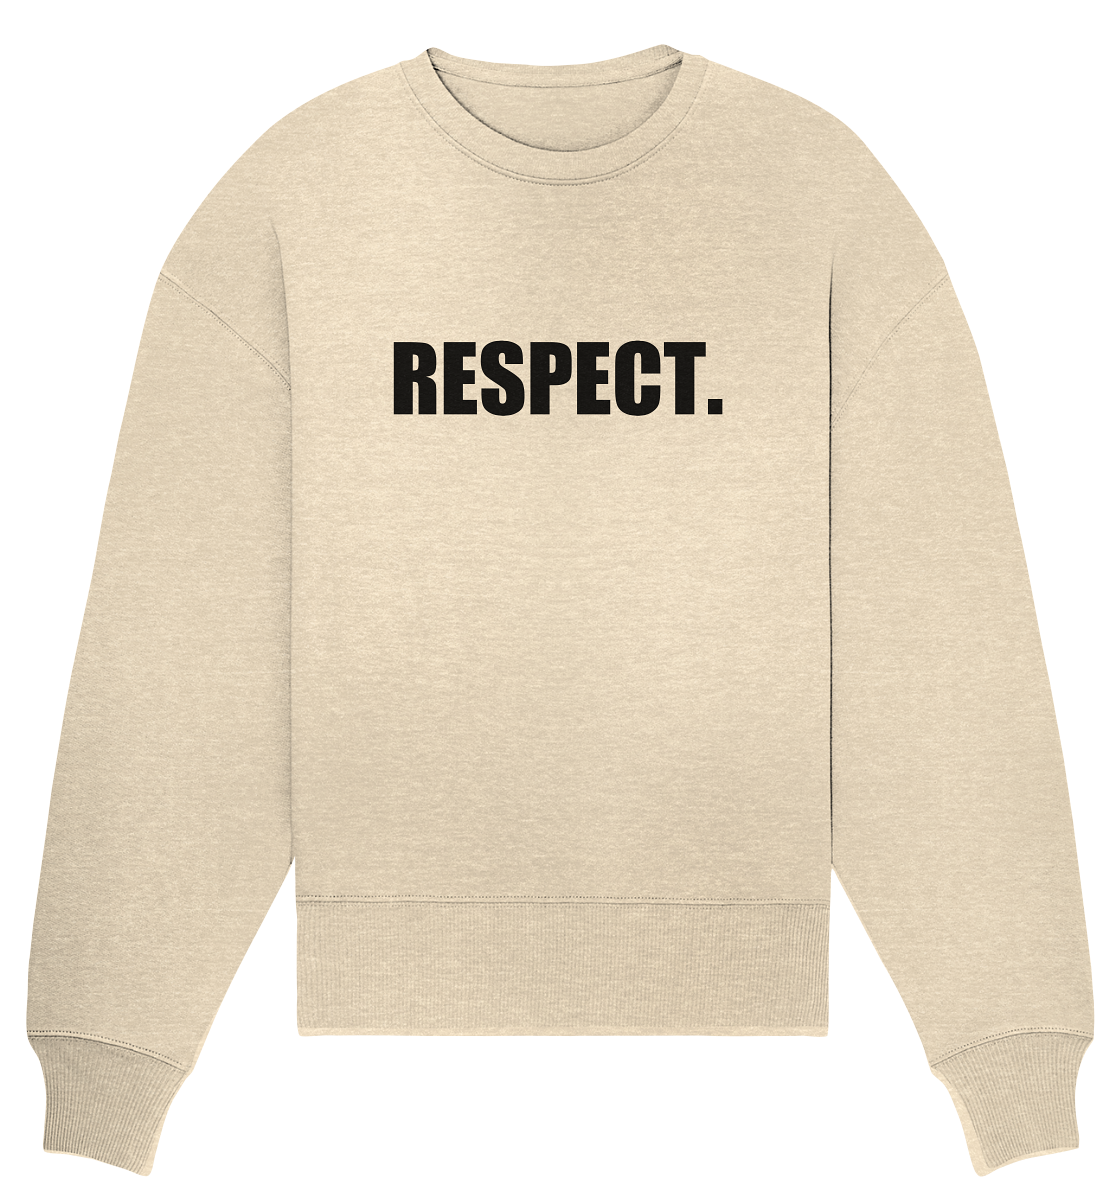 N.O.S.W. BLOCk Fanblock Sweater "RESPECT." Girls Organic Oversize Sweatshirt natural raw